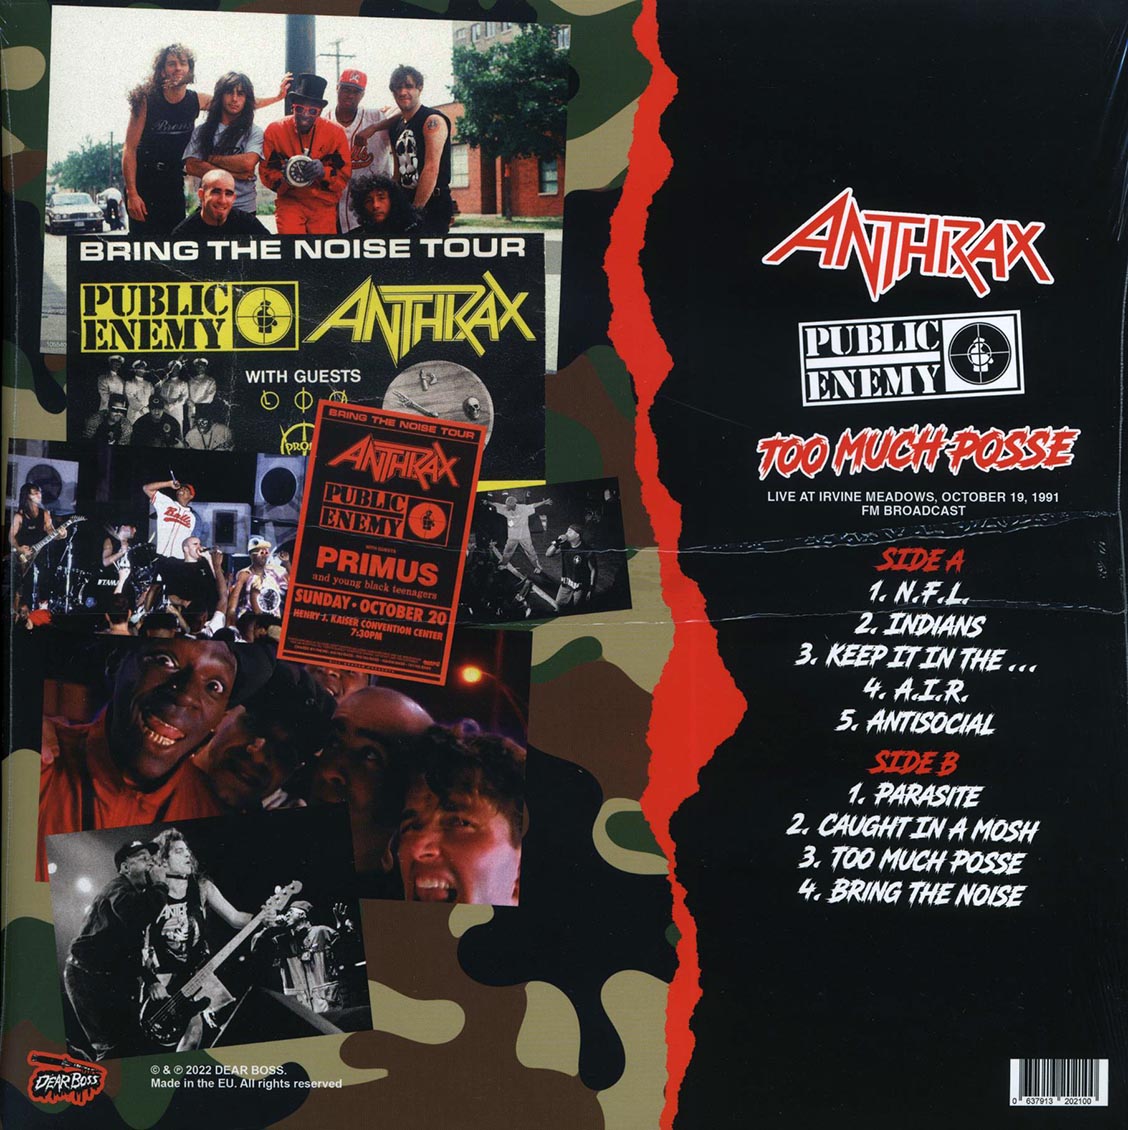 Anthrax, Public Enemy - Too Much Posse: Live At Irvine Meadows, October 19, 1991 - Vinyl LP, LP